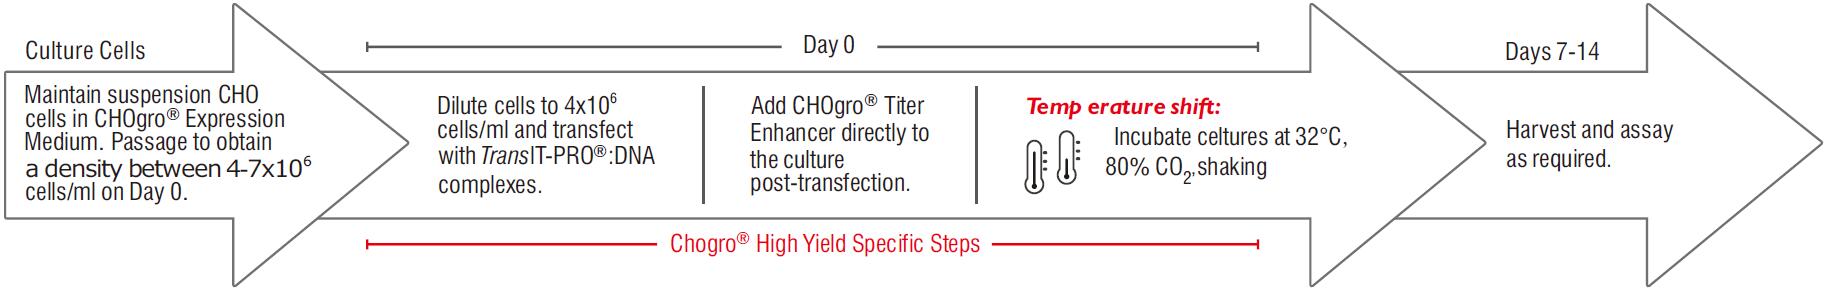 TransIT-PRO Transfectio 转染试剂专门针对悬浮CHO、悬浮HEK293、蛋白生产